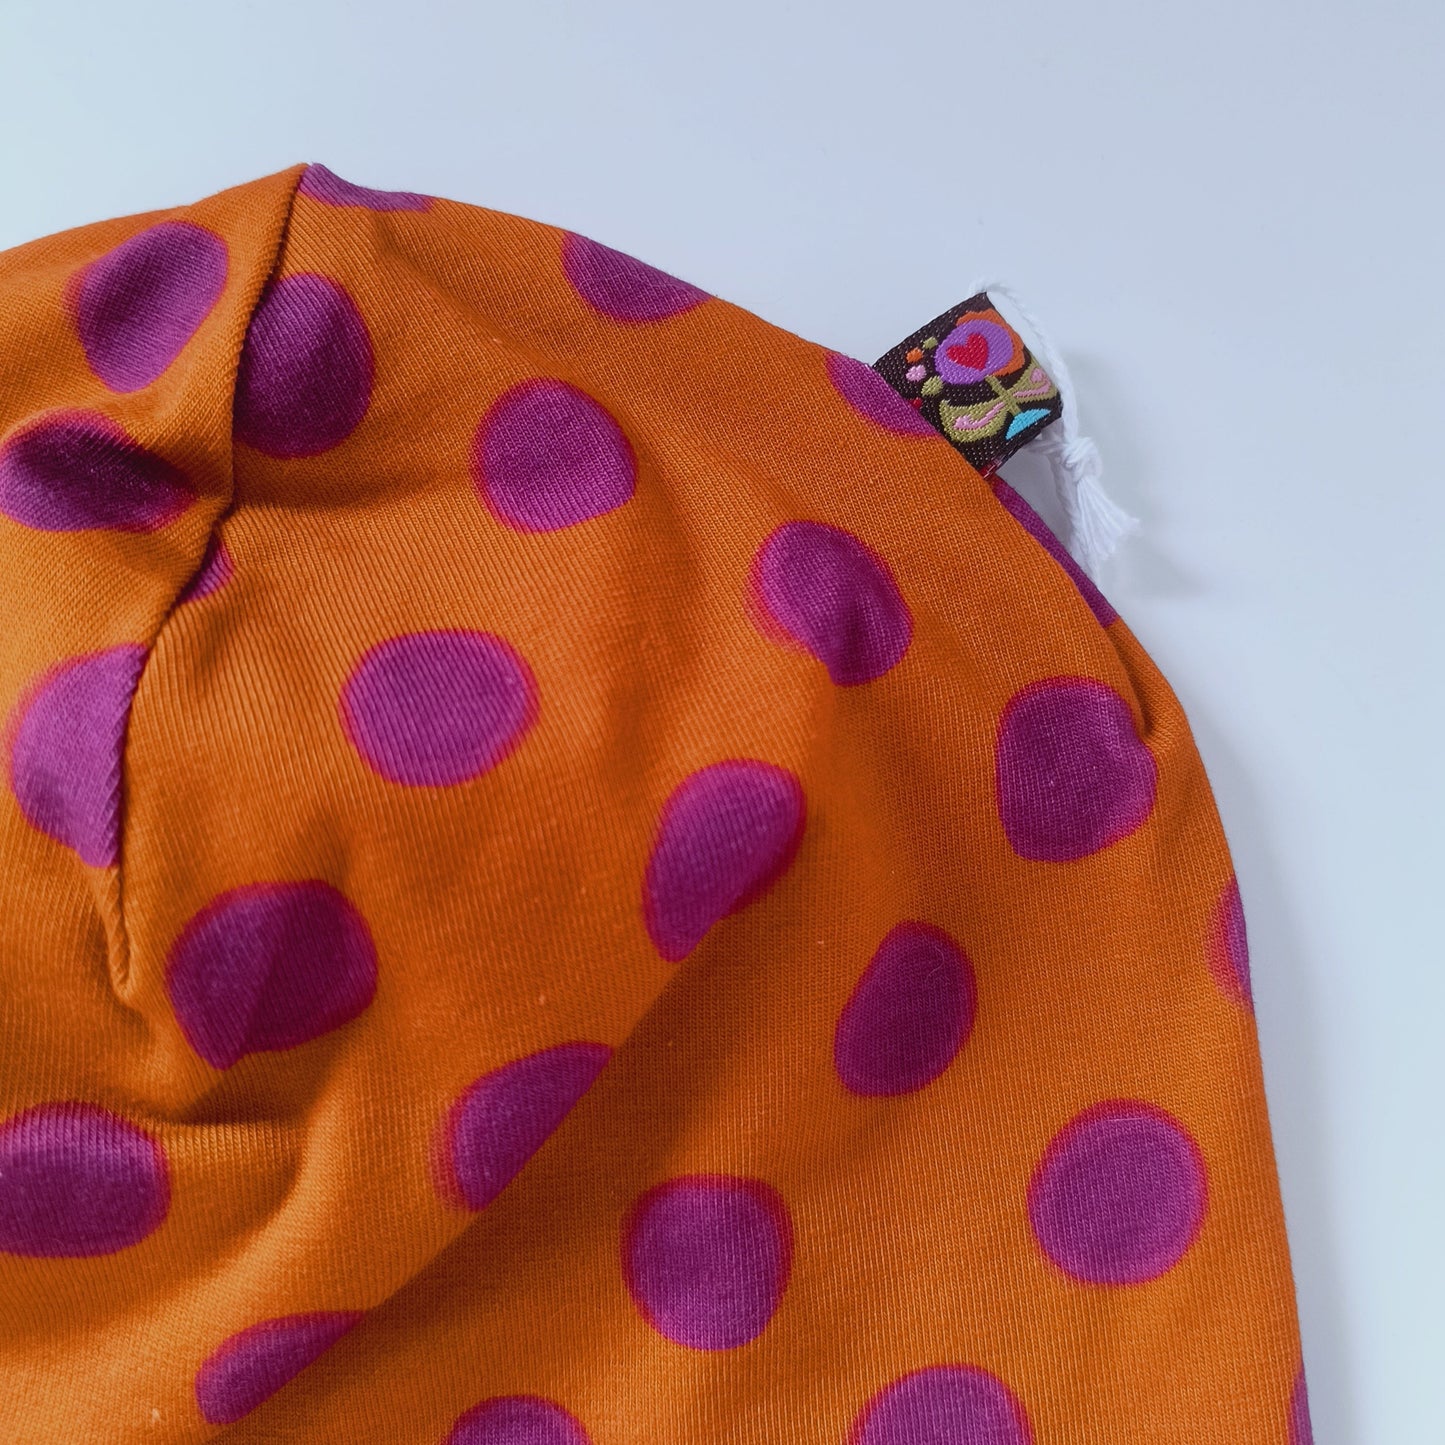 Baby beanie hat, orange purple dots w. flower label, size EUR 44 cm head circumference/US 6-7 months (Handmade in Canada)